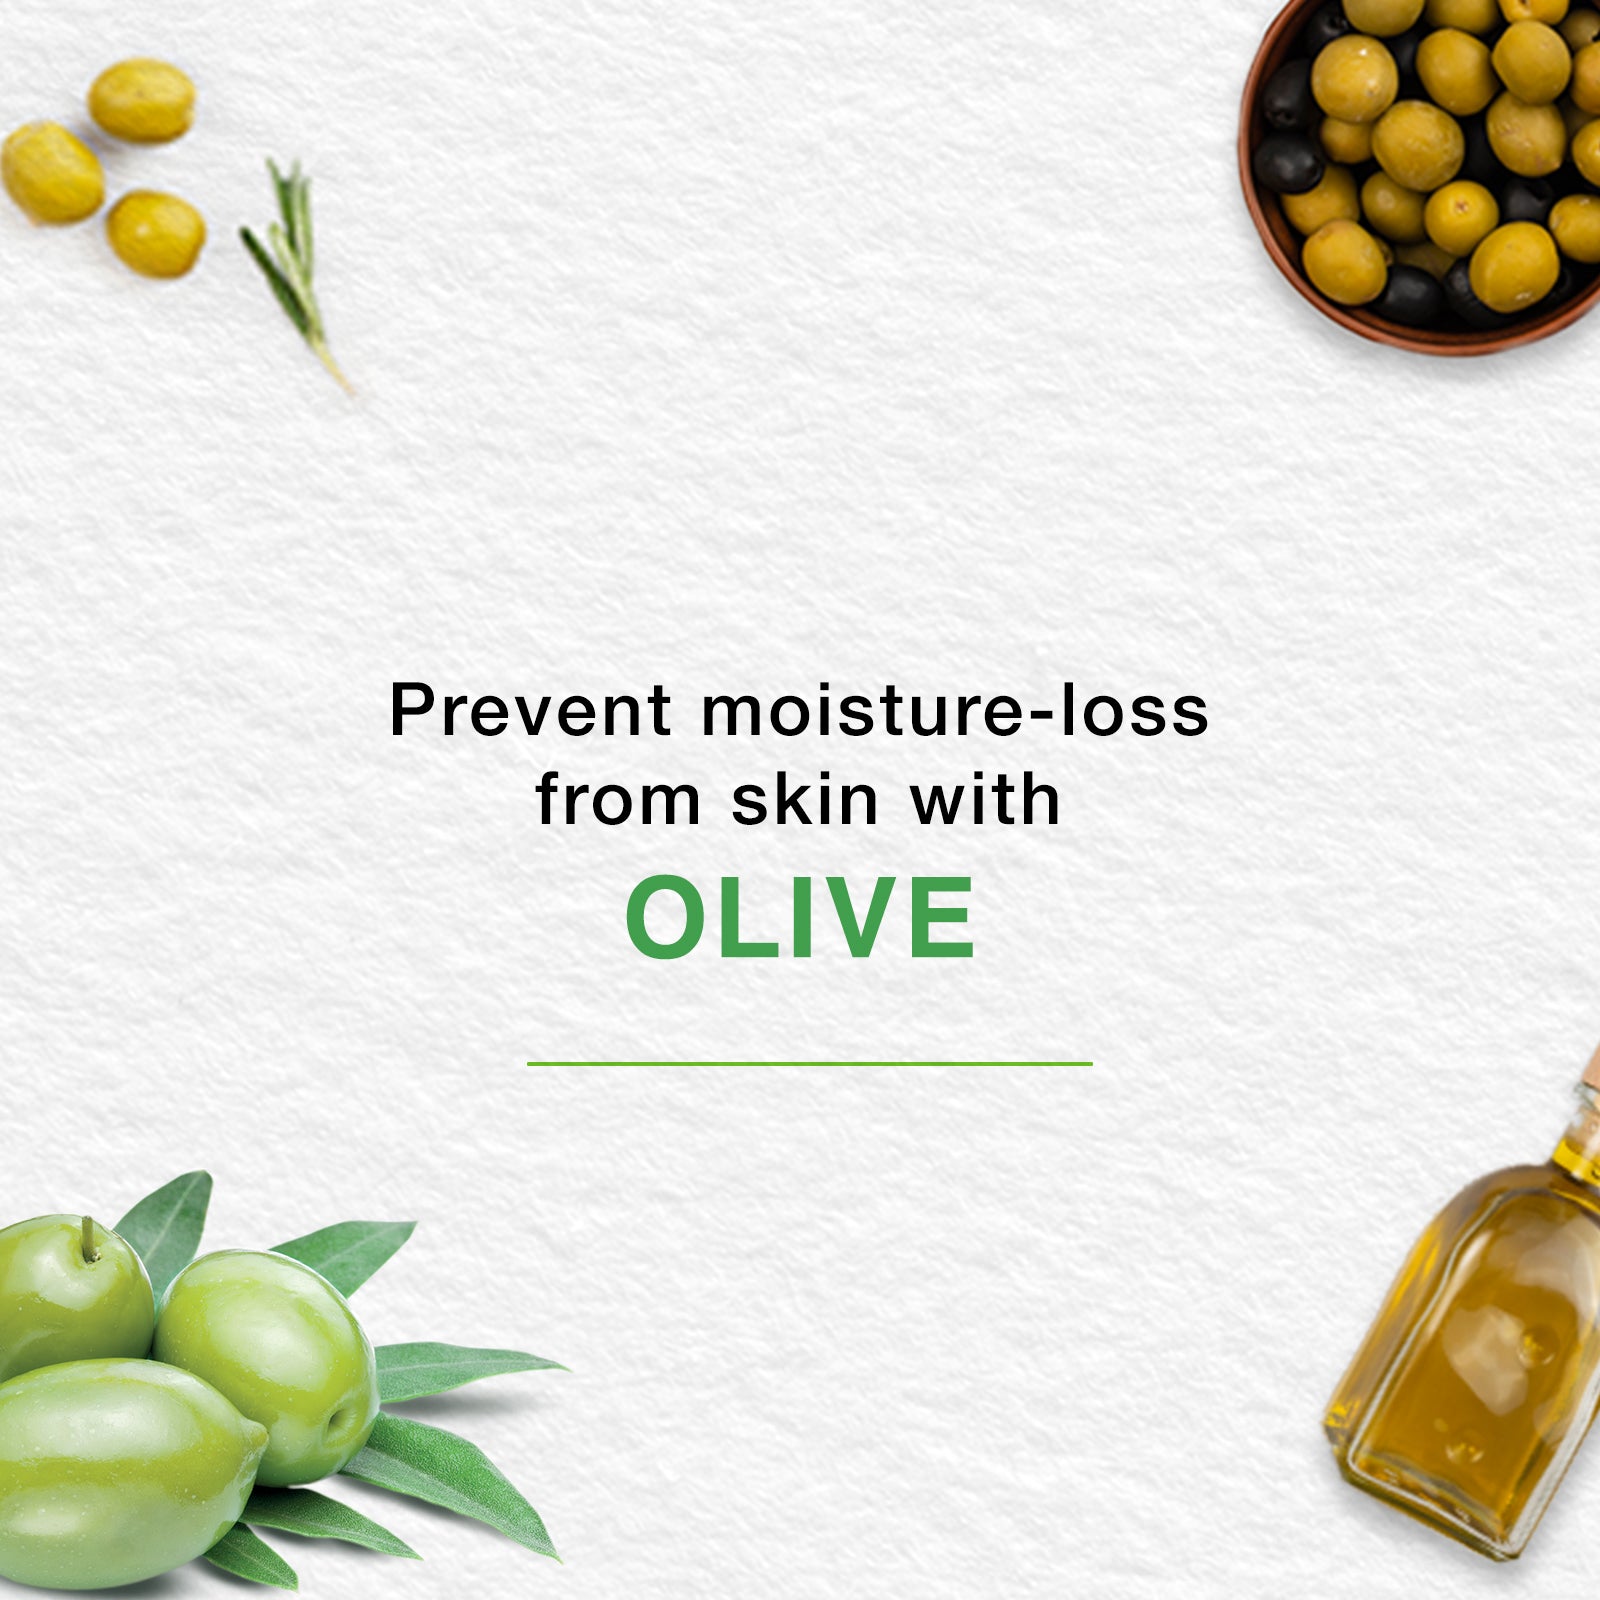 Olive Extra Nourishing Cream 50ml